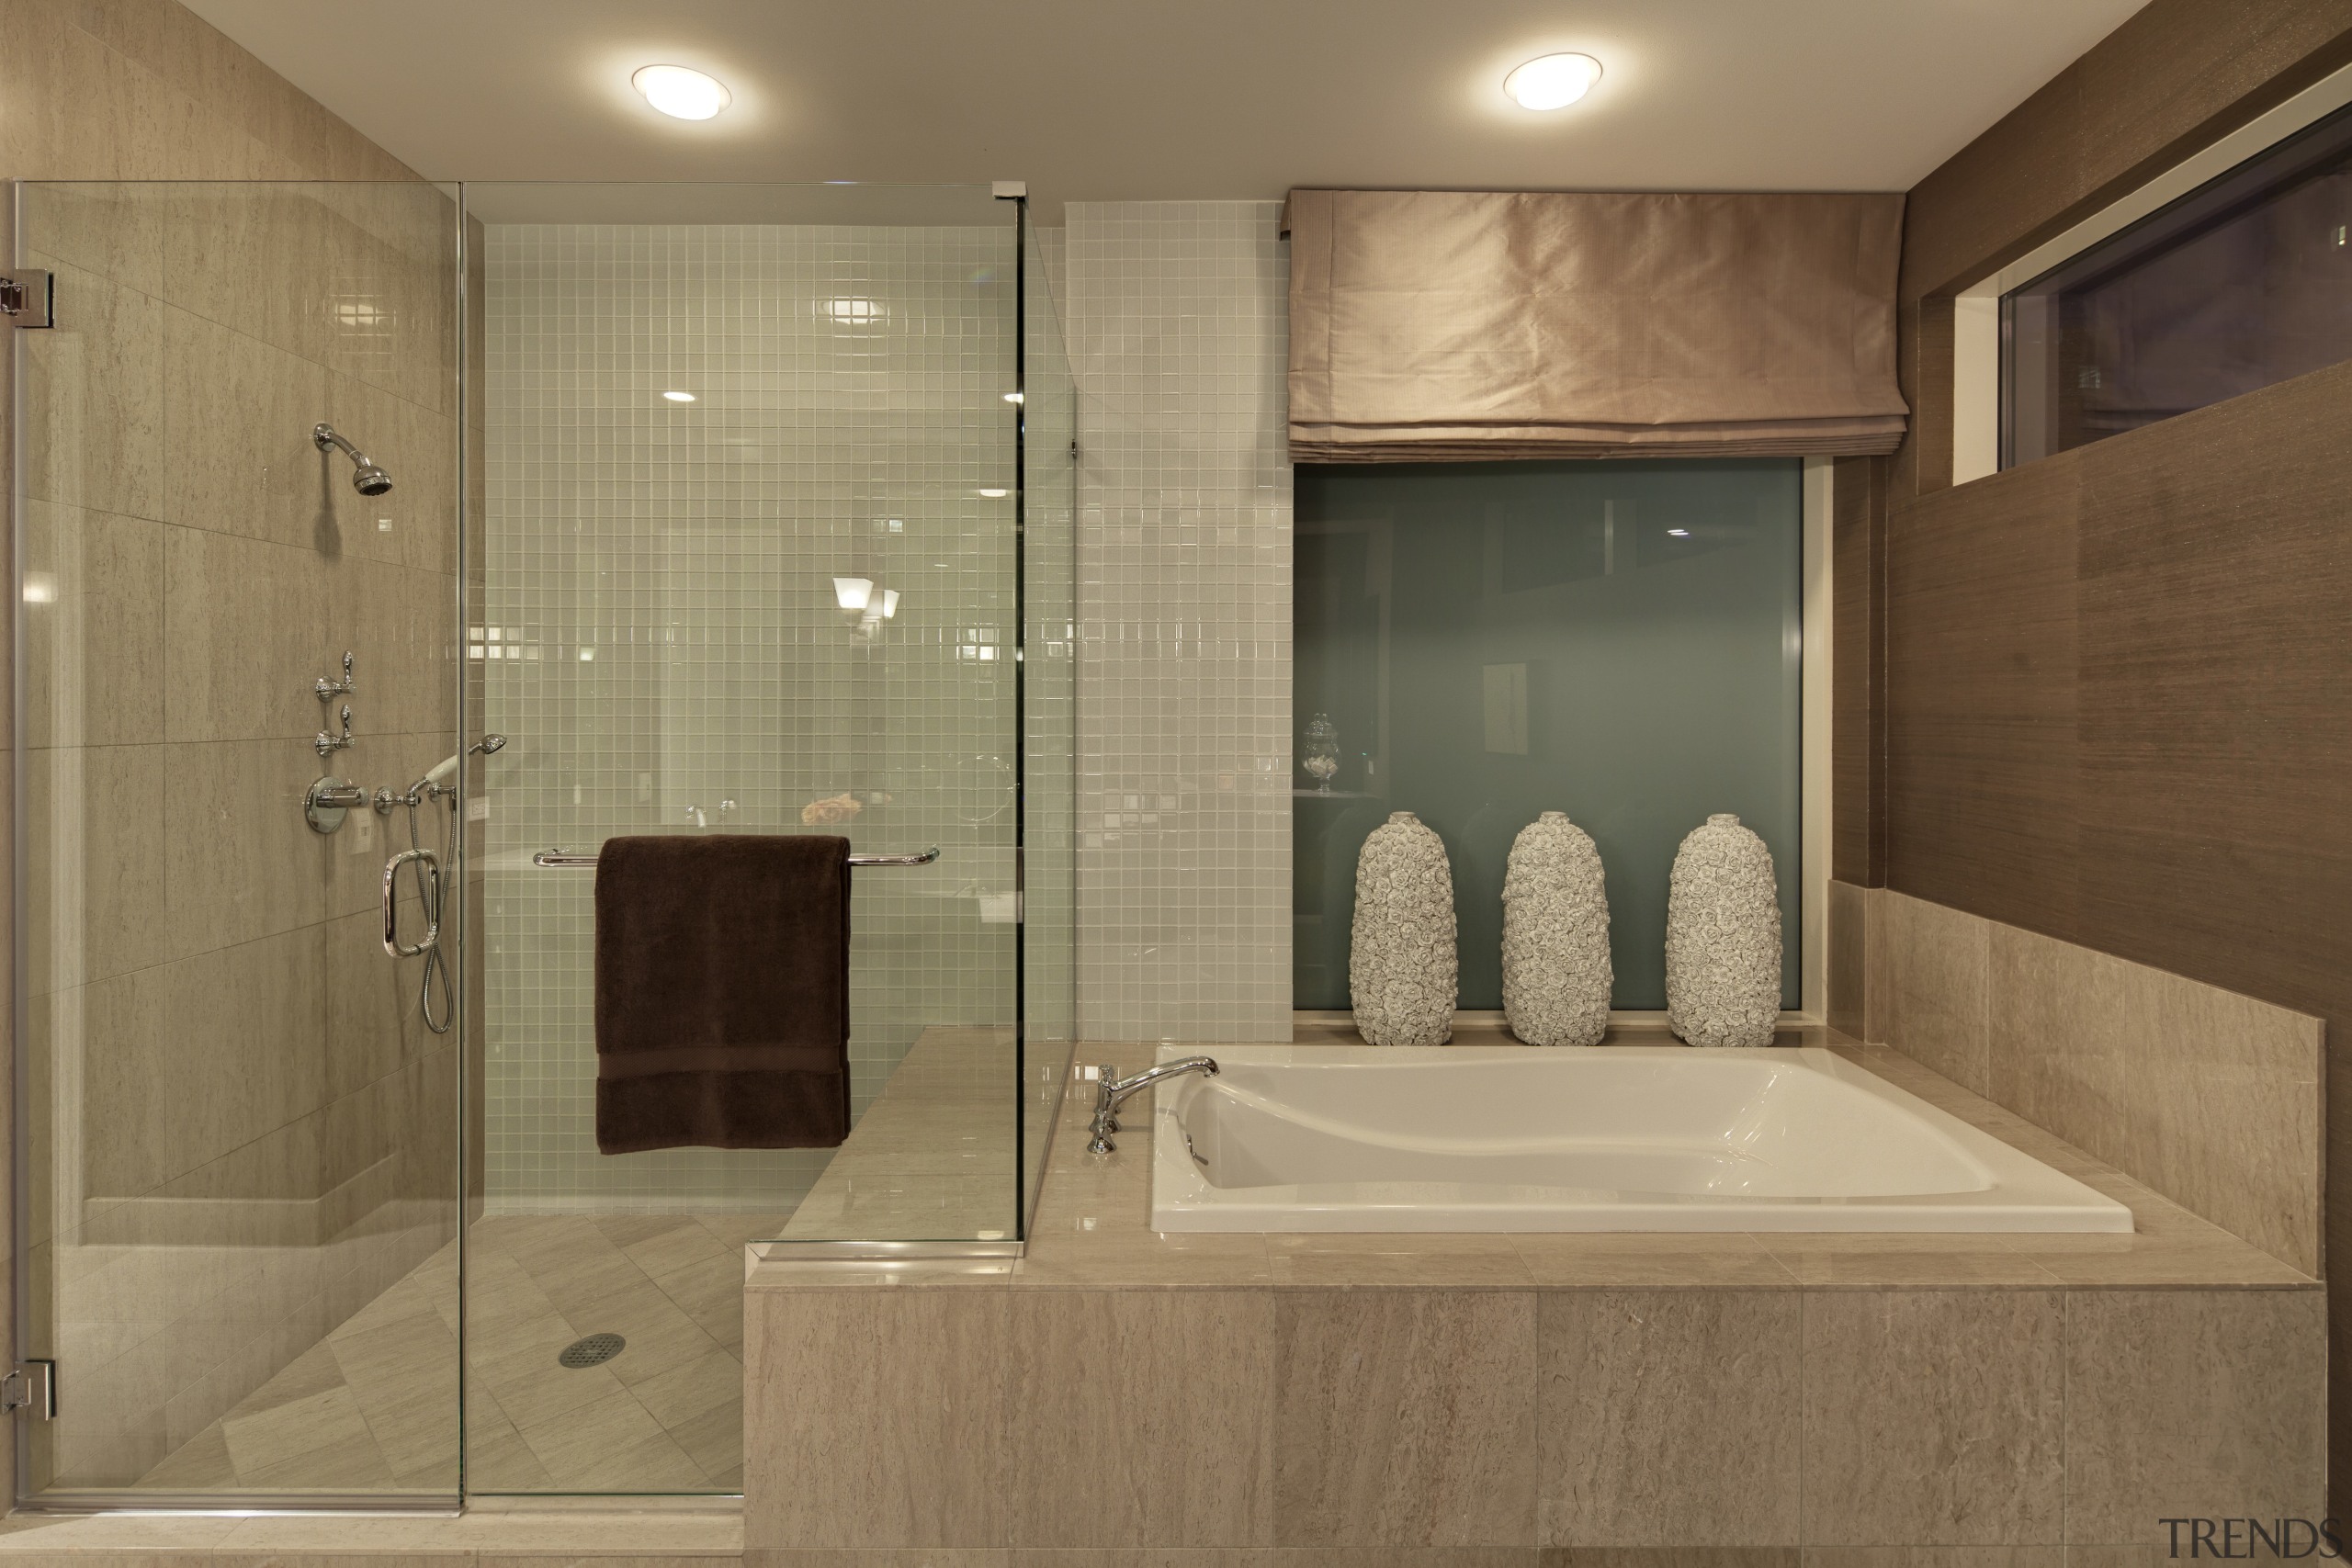 This master suite was designed by the Gary bathroom, floor, interior design, plumbing fixture, room, tile, brown